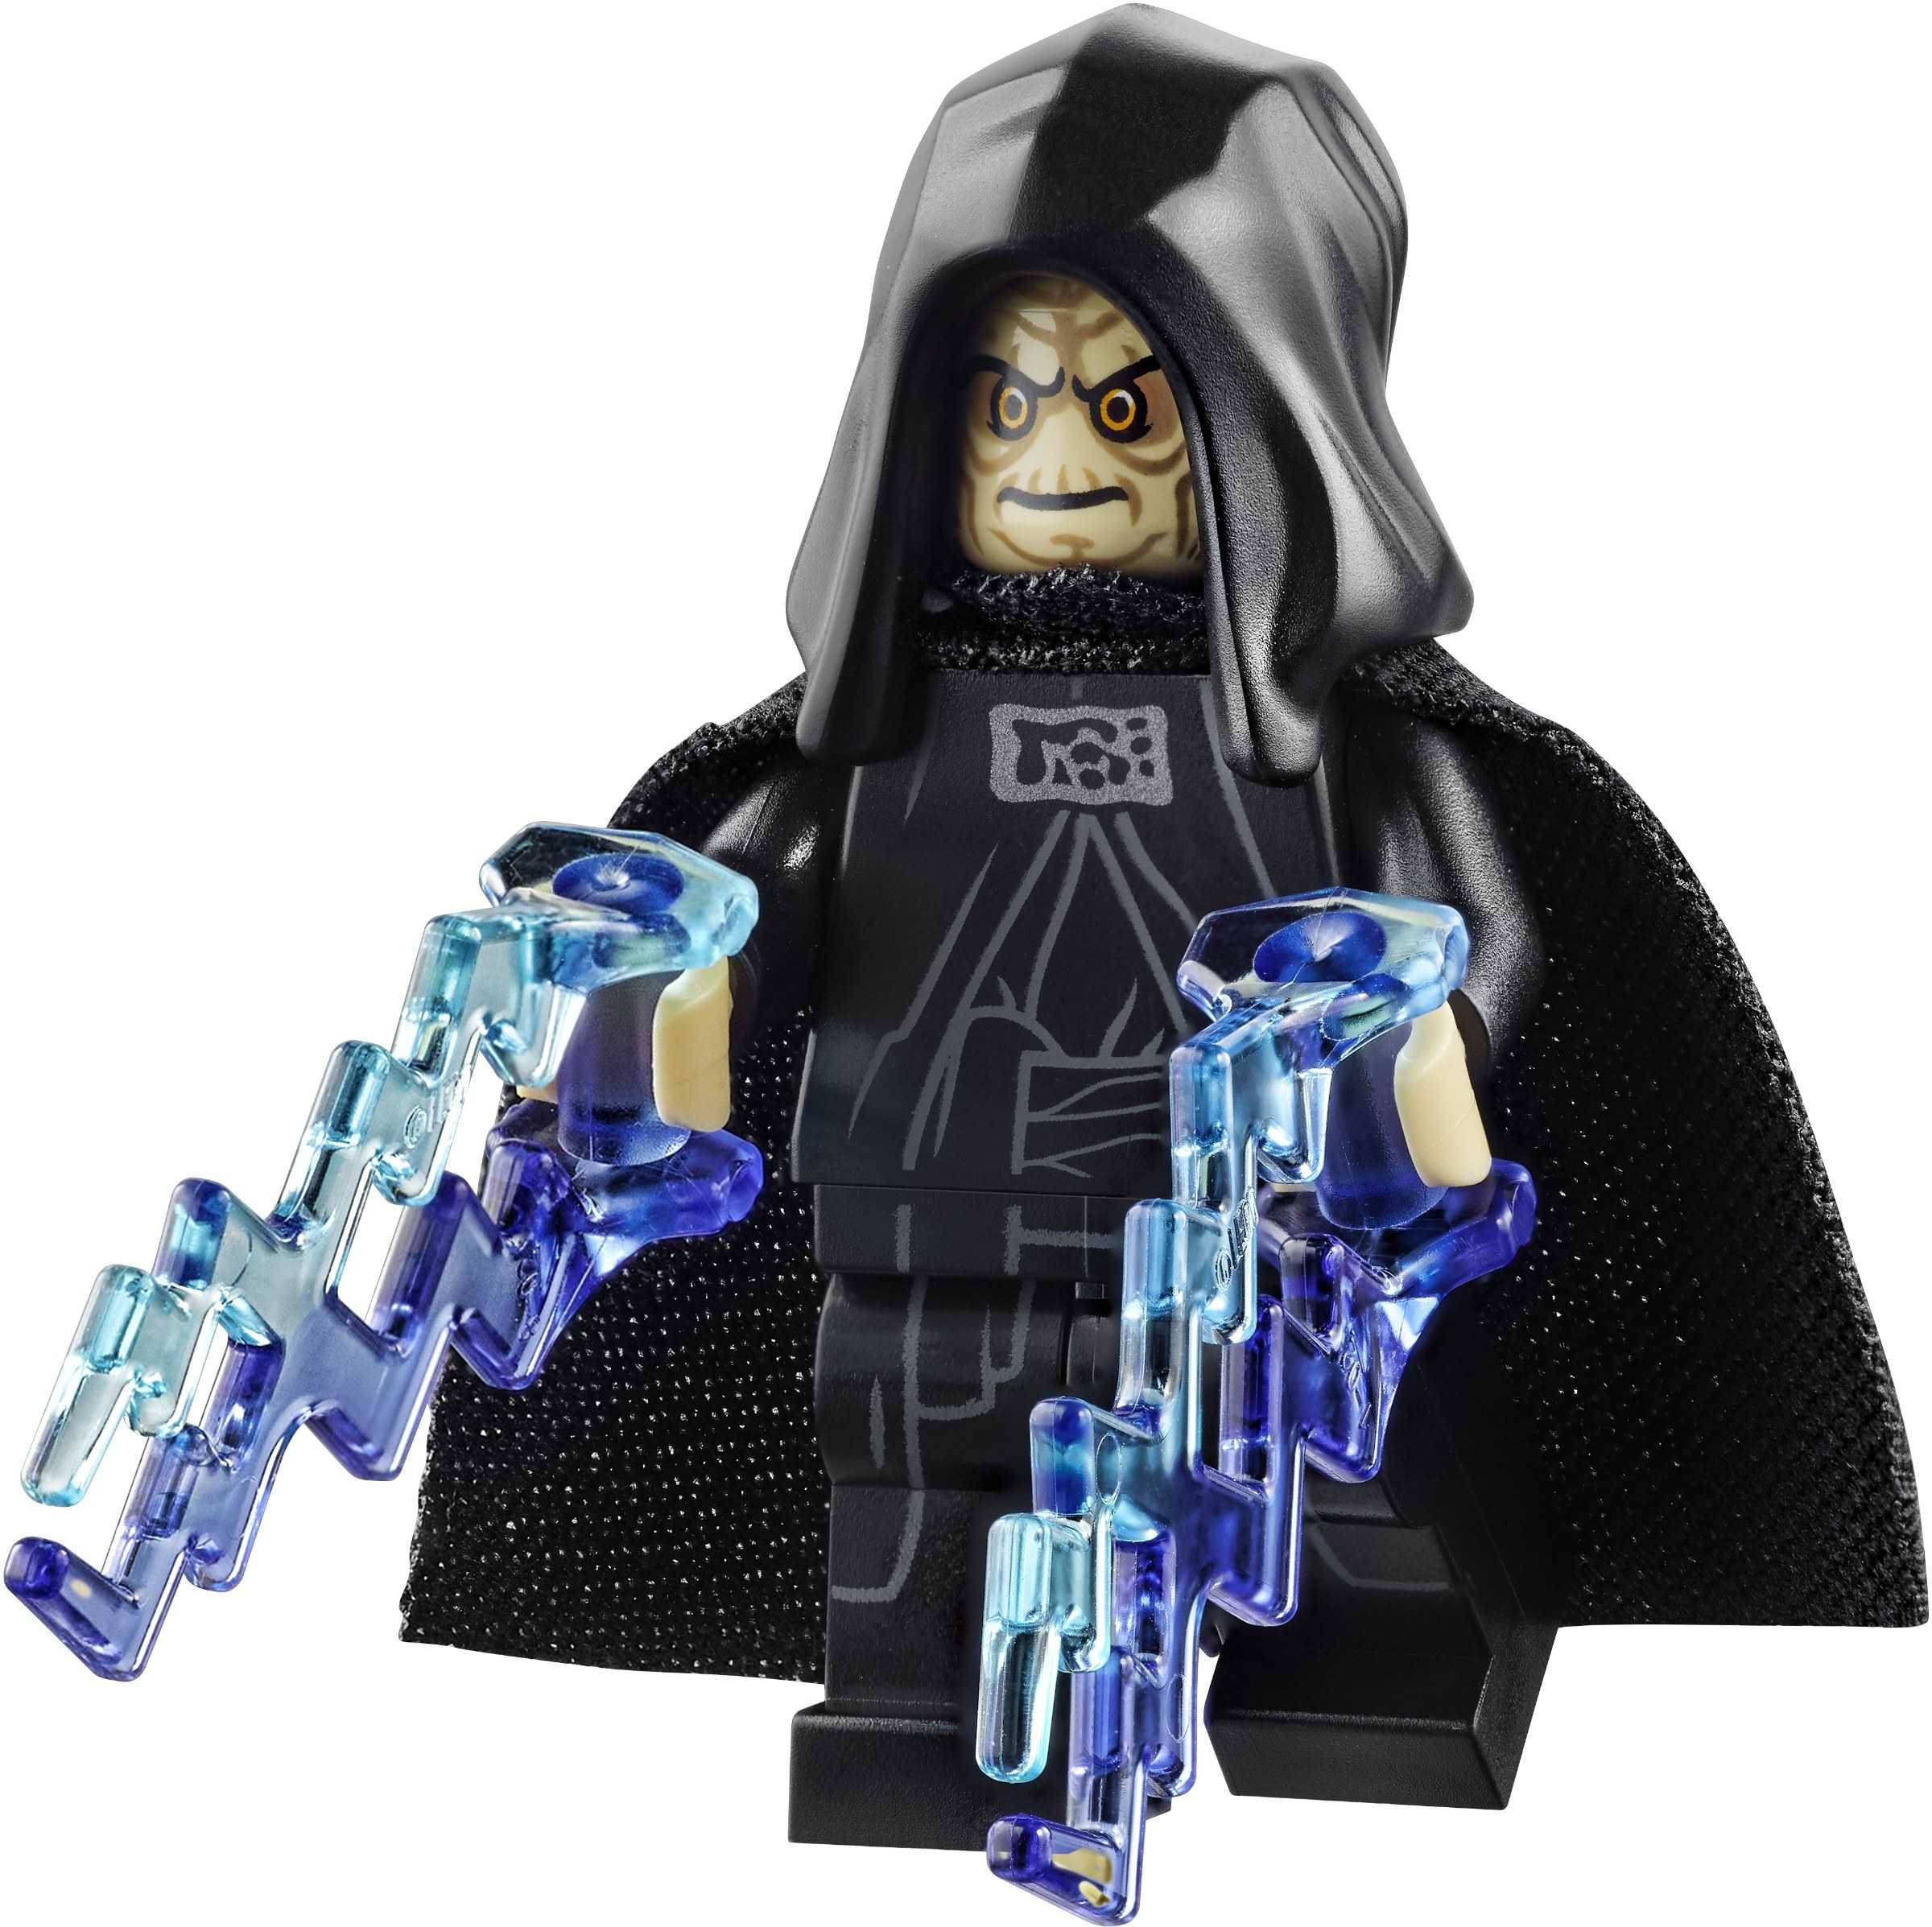 LEGO Star Wars 75291 - Duelul Final pe Death Star - NOU sigilat